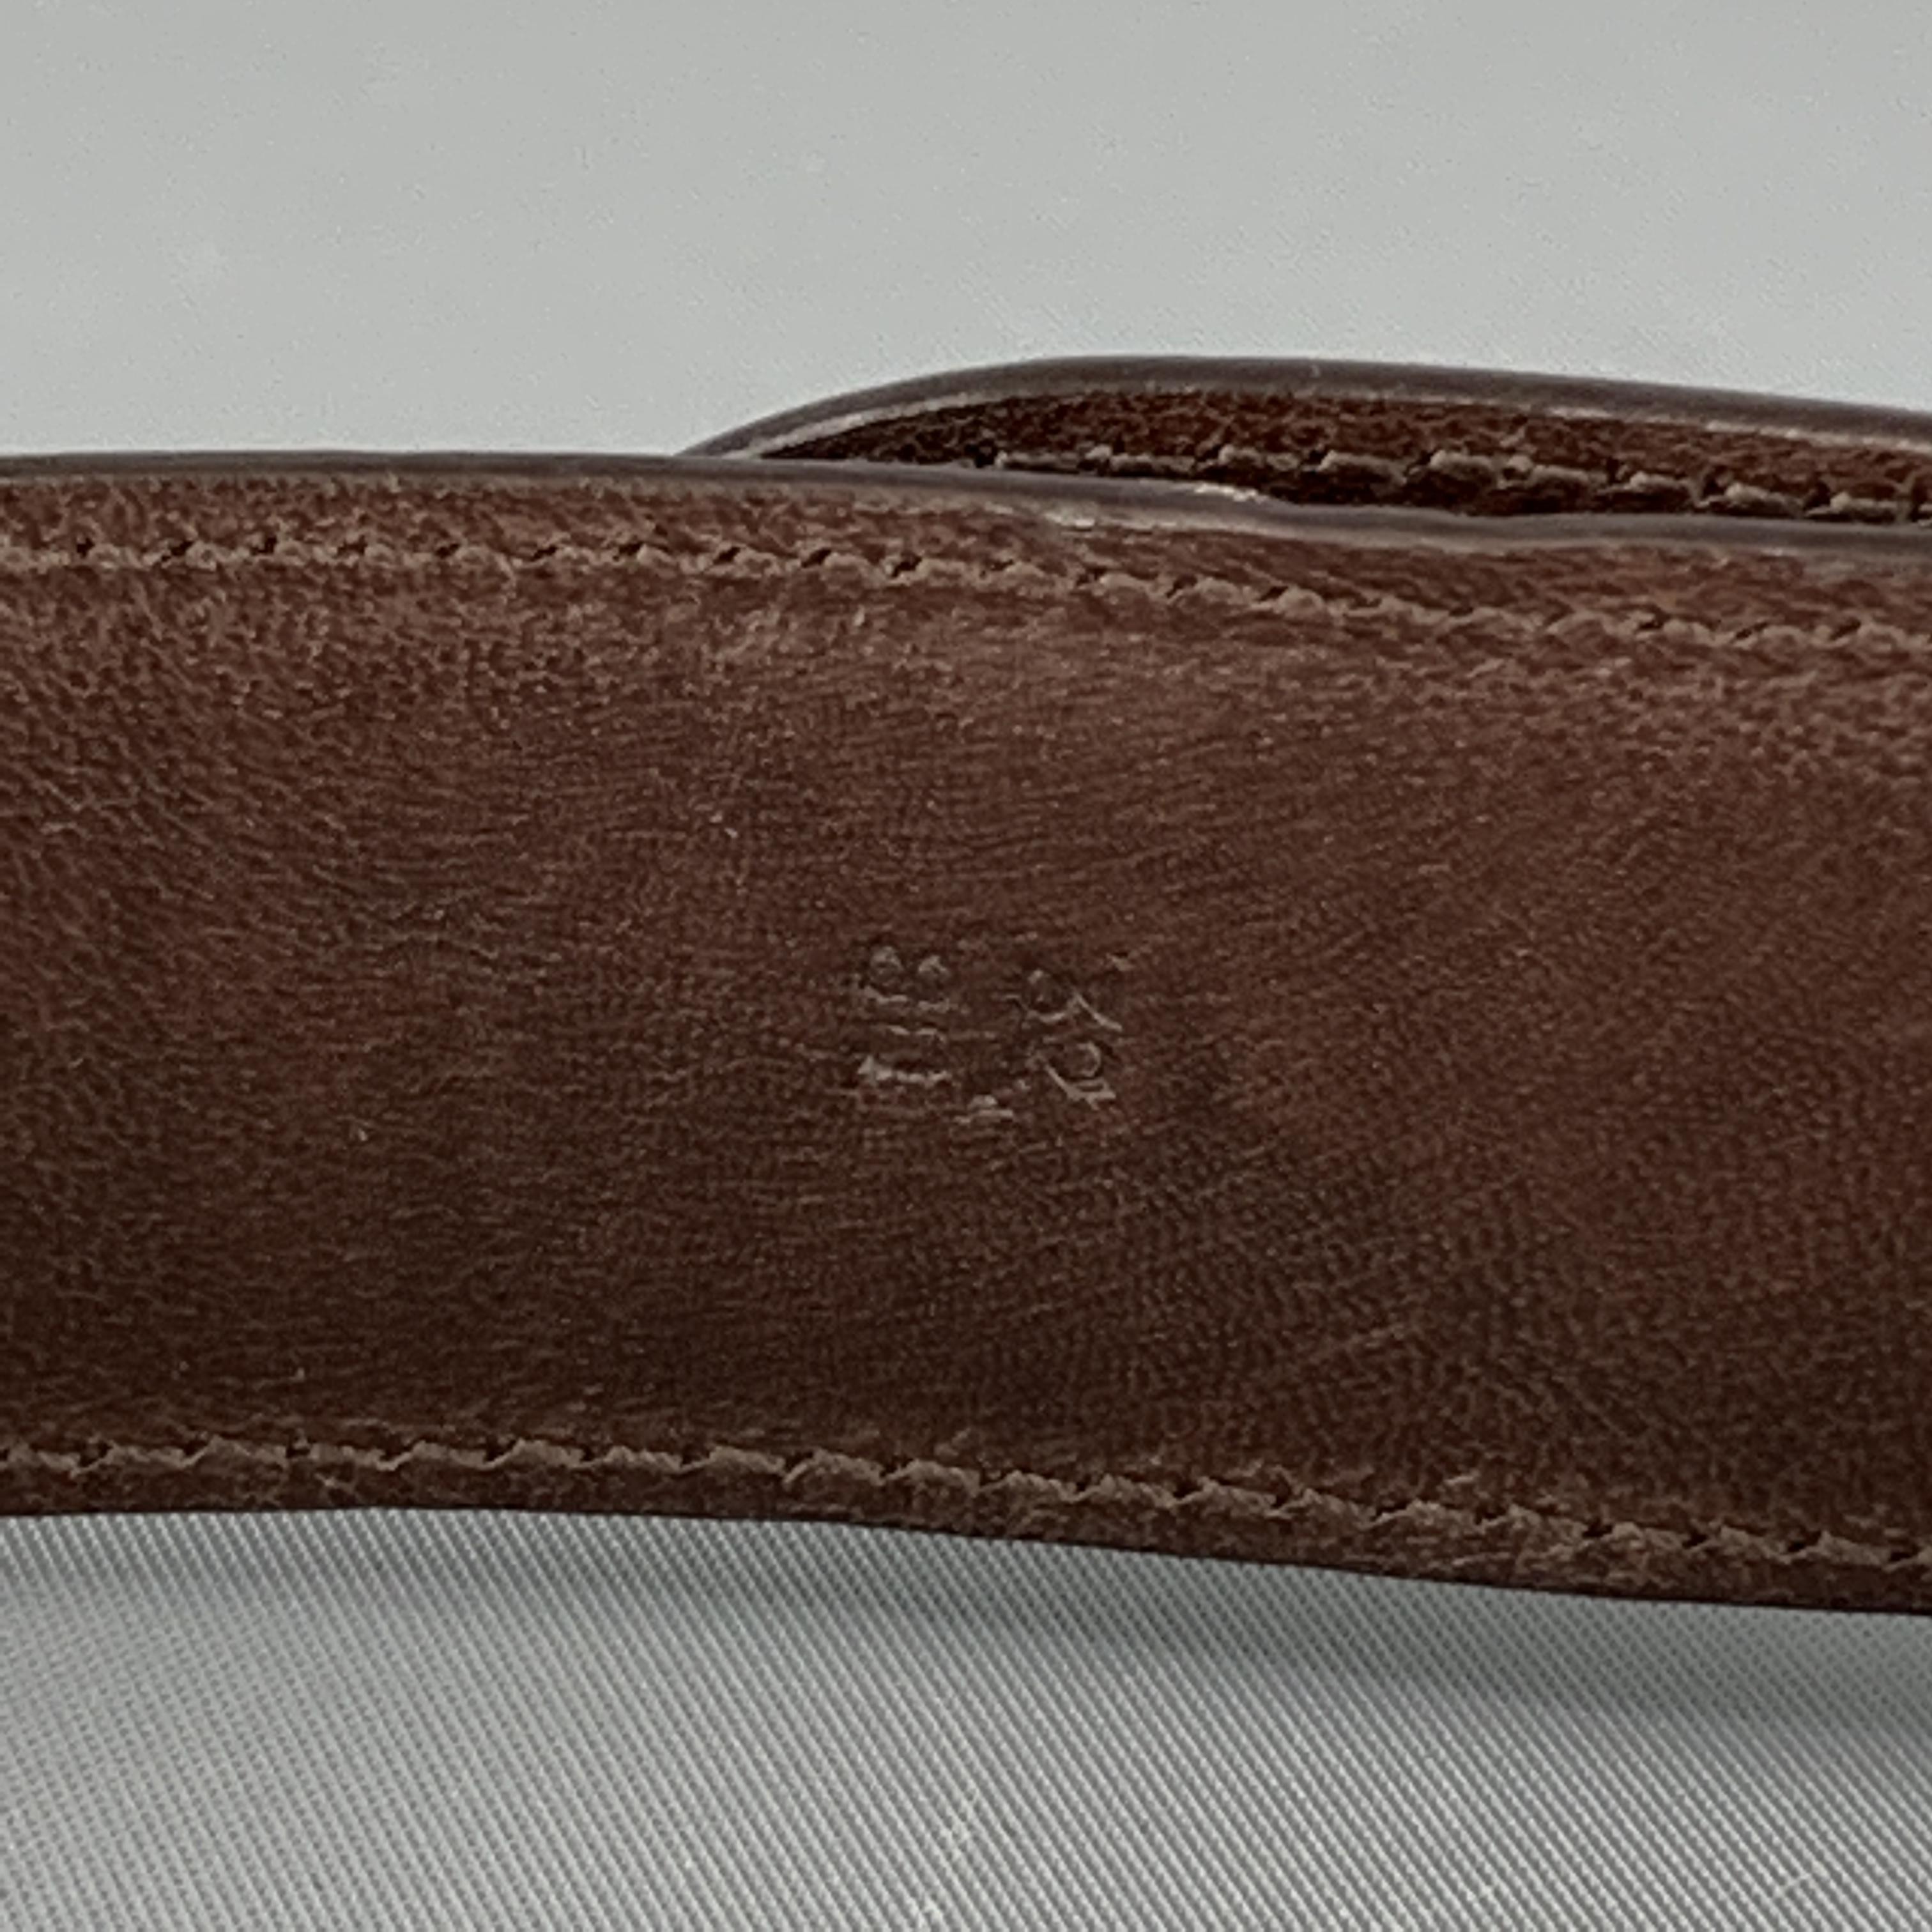 RALPH LAUREN Solid Size 32 Brown Leather Belt 2